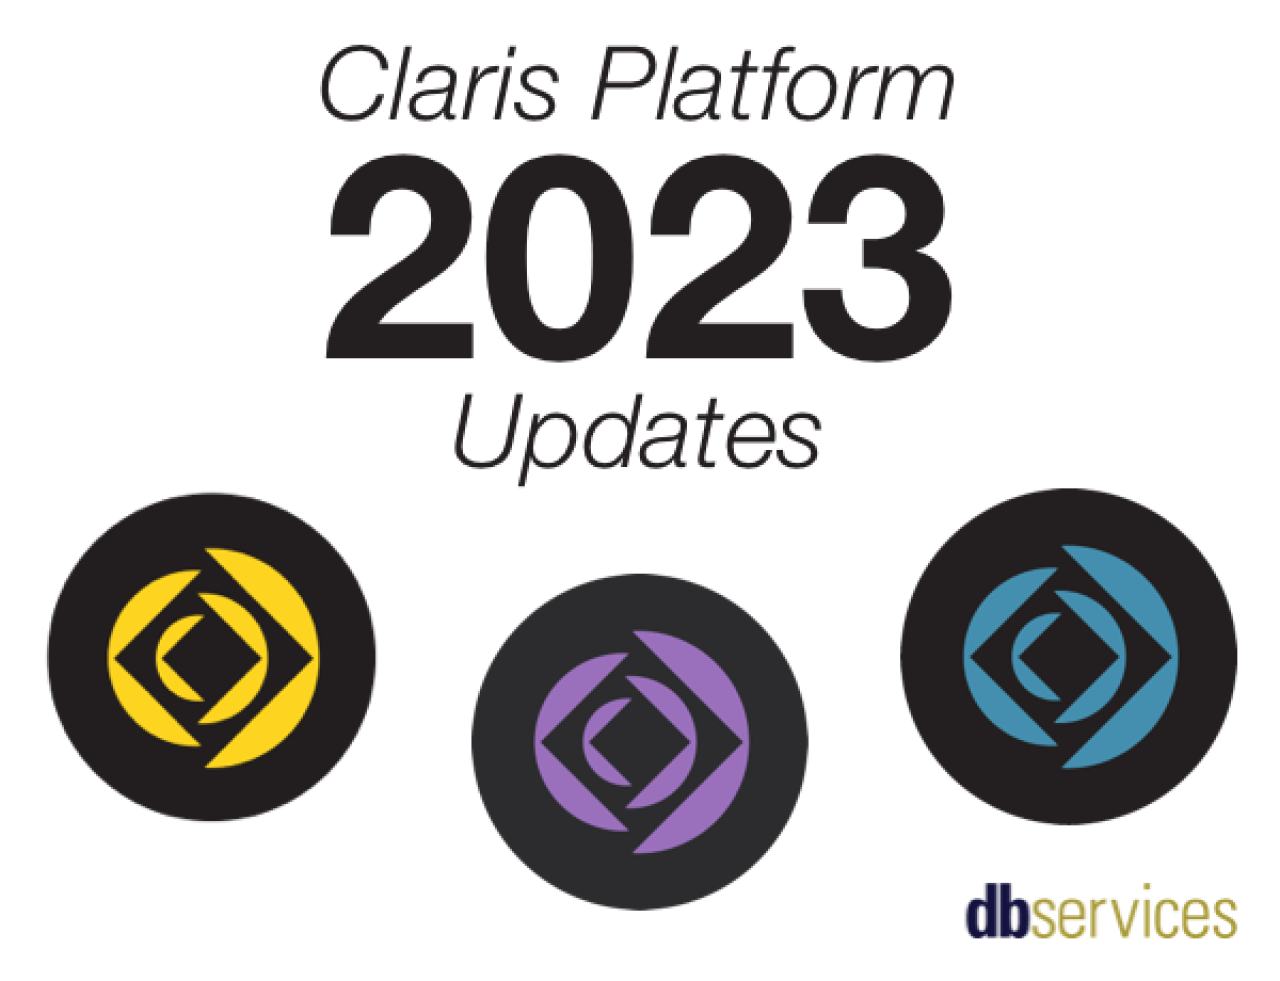 claris platform 2023 updates.